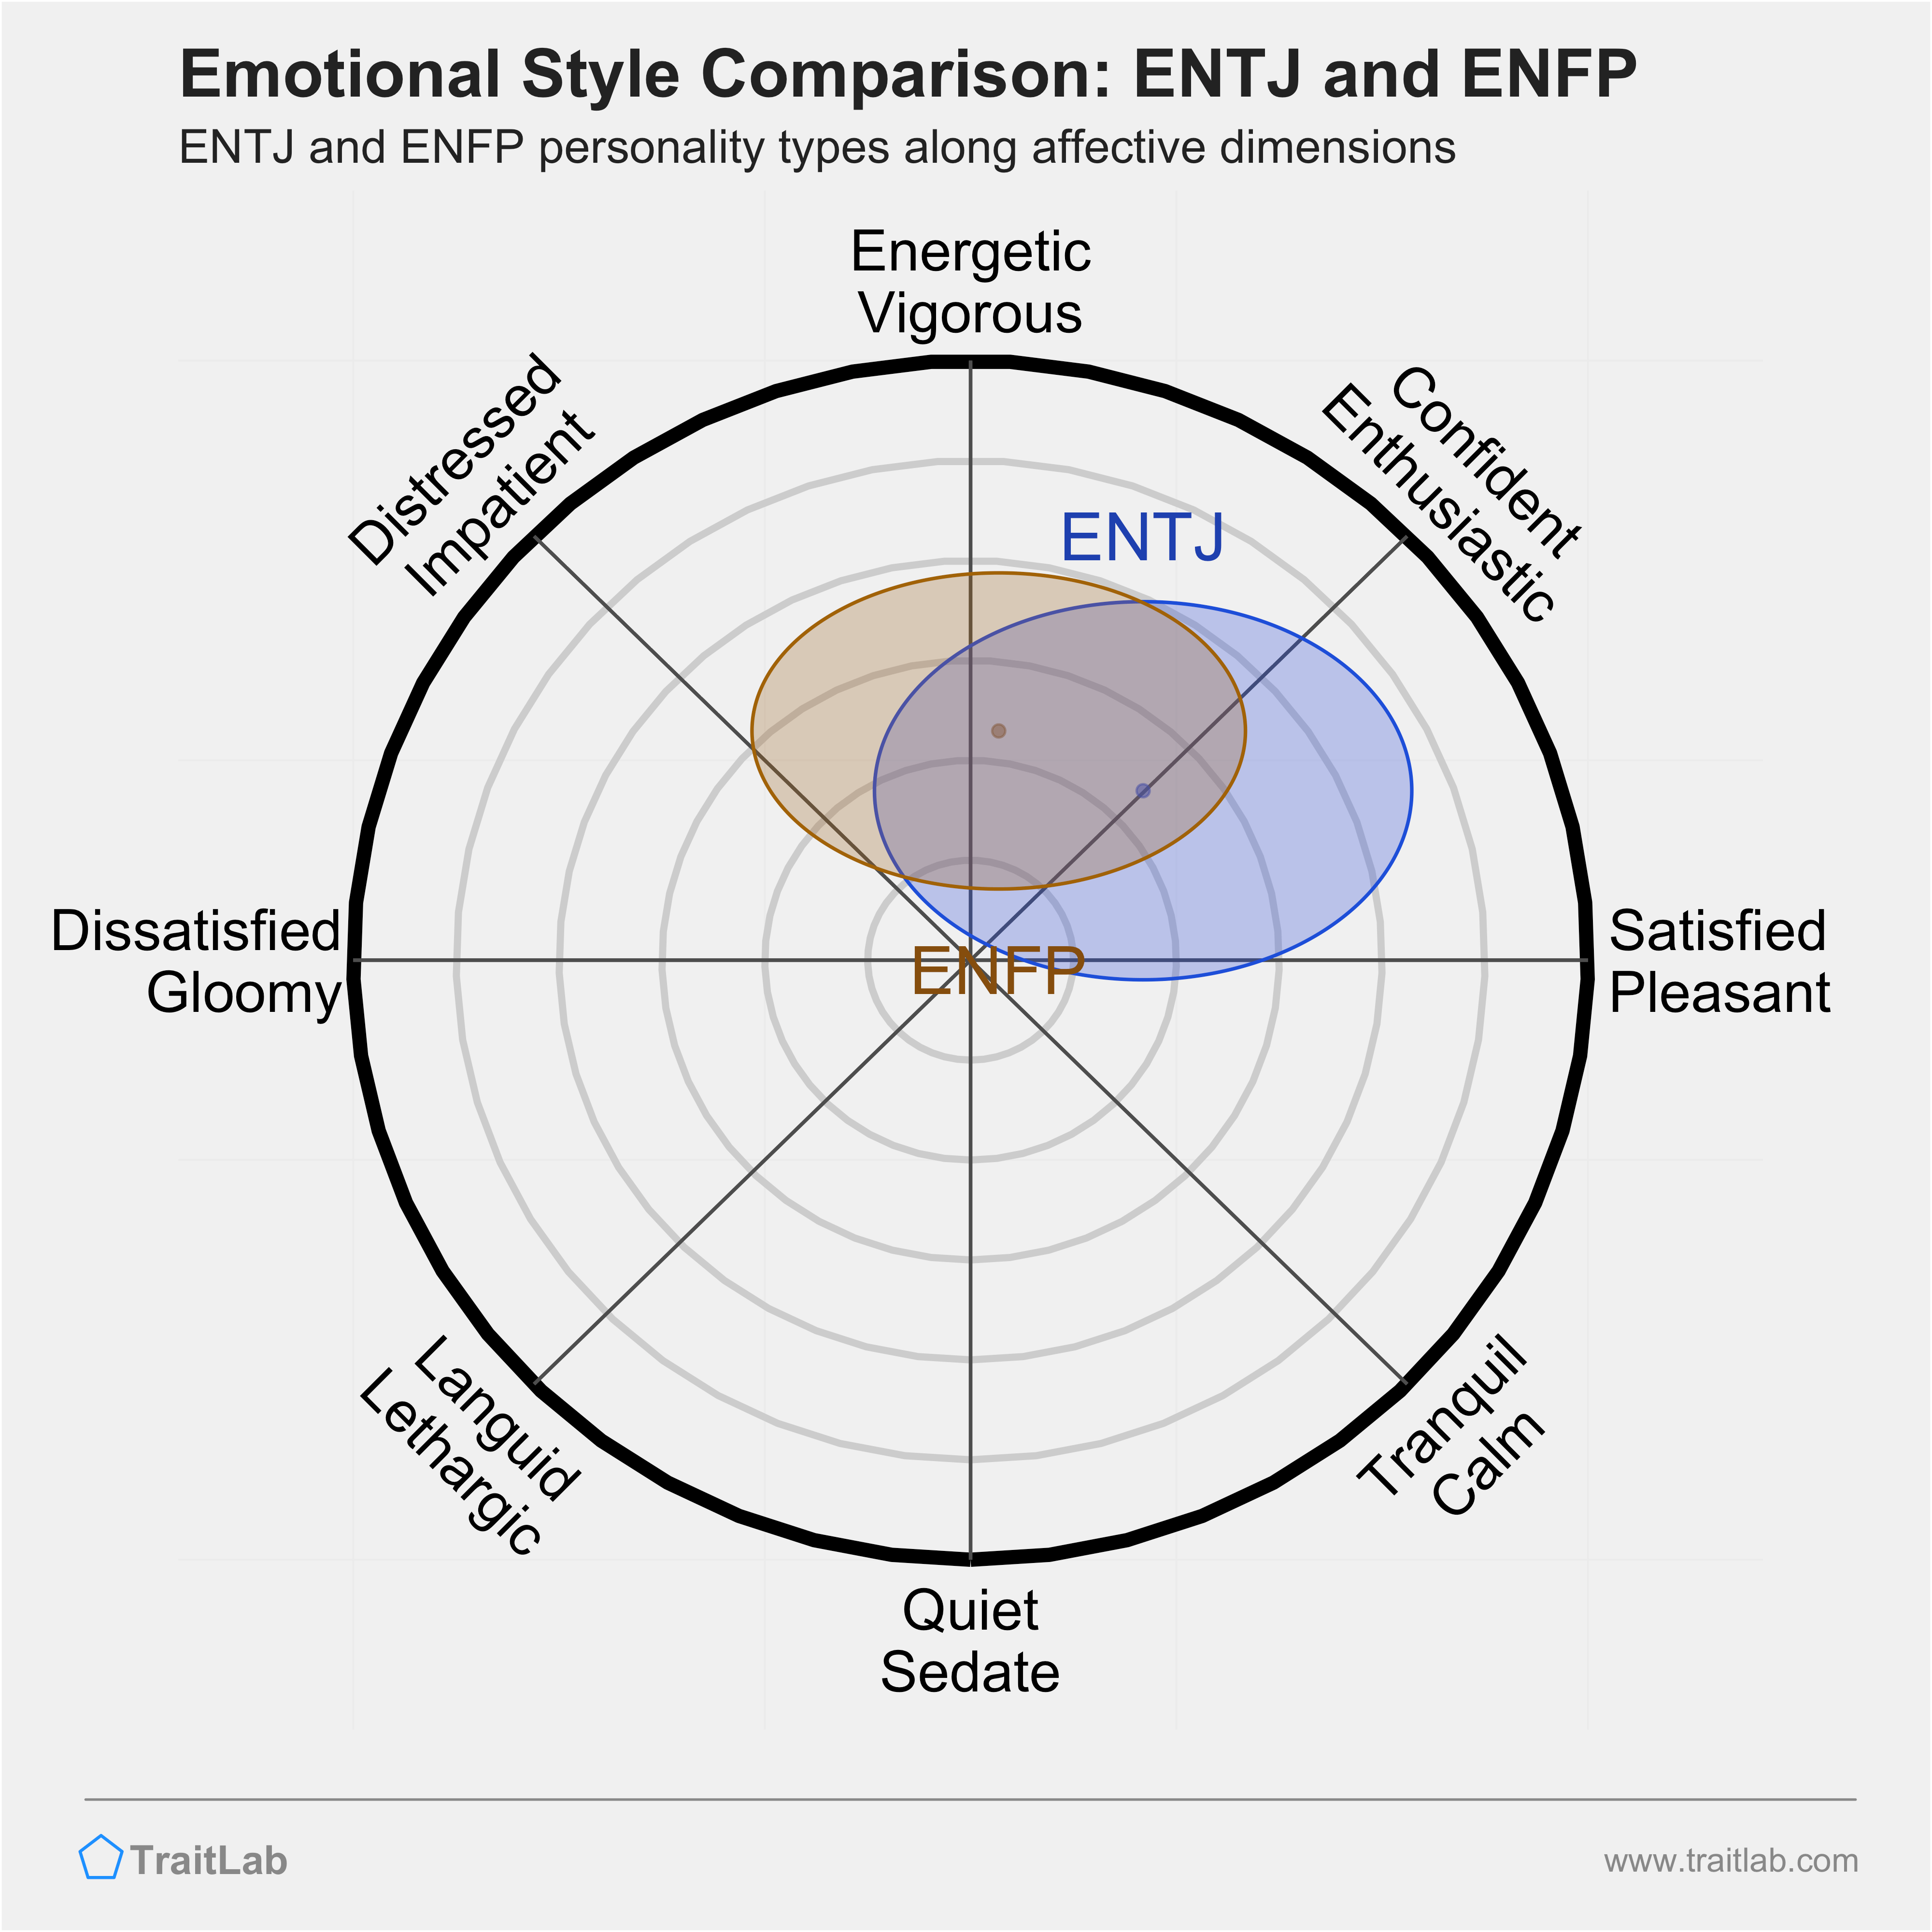 ENTJ and ENFP comparison across emotional (affective) dimensions